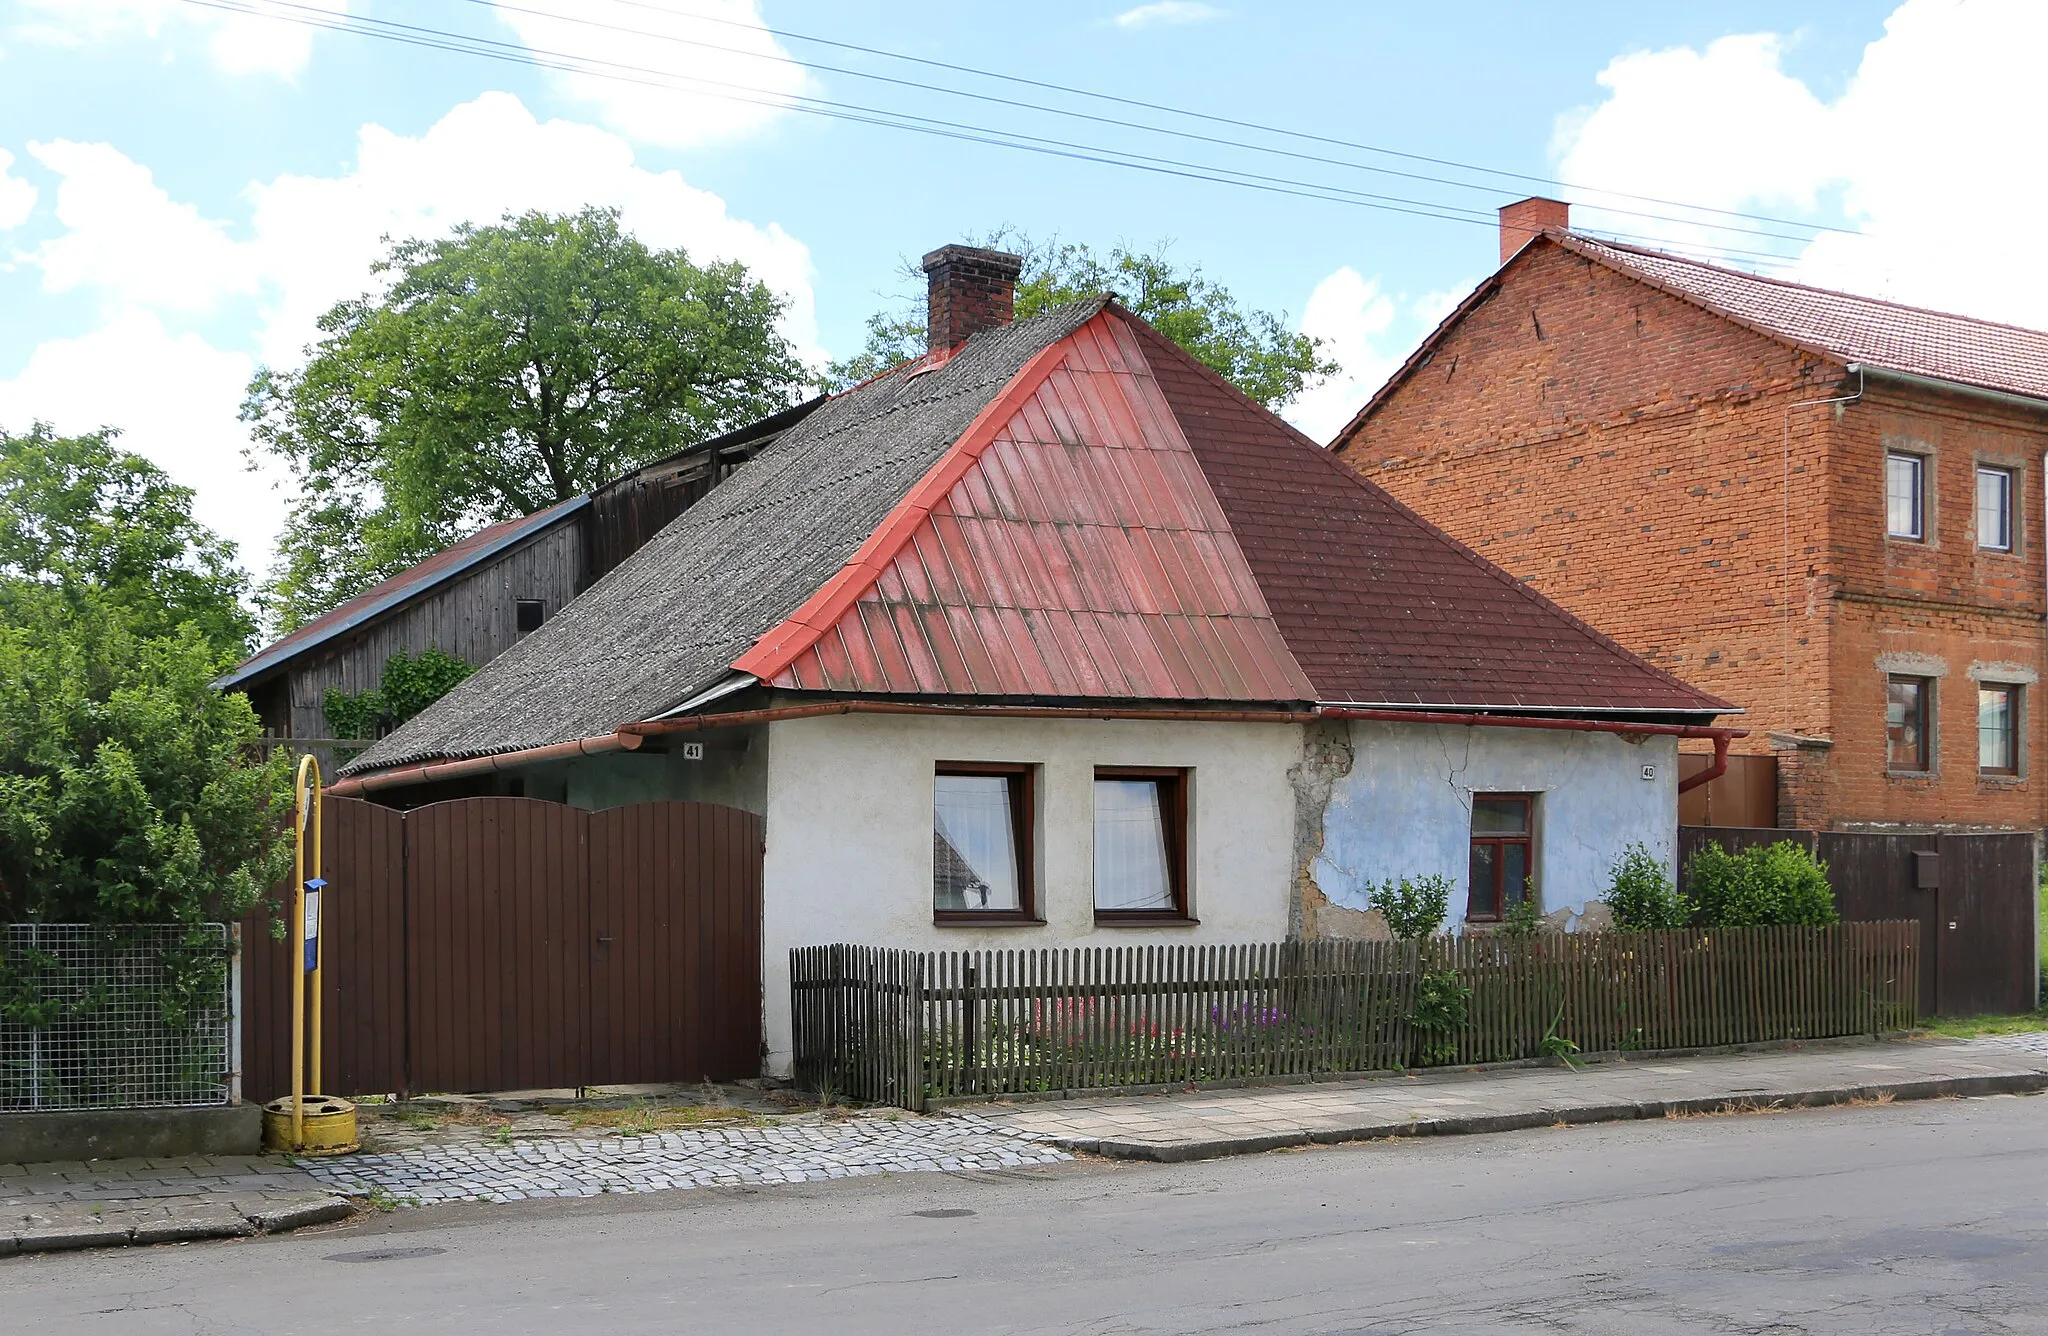 Photo showing: House No 41 in Bílsko village, Czech Republic.